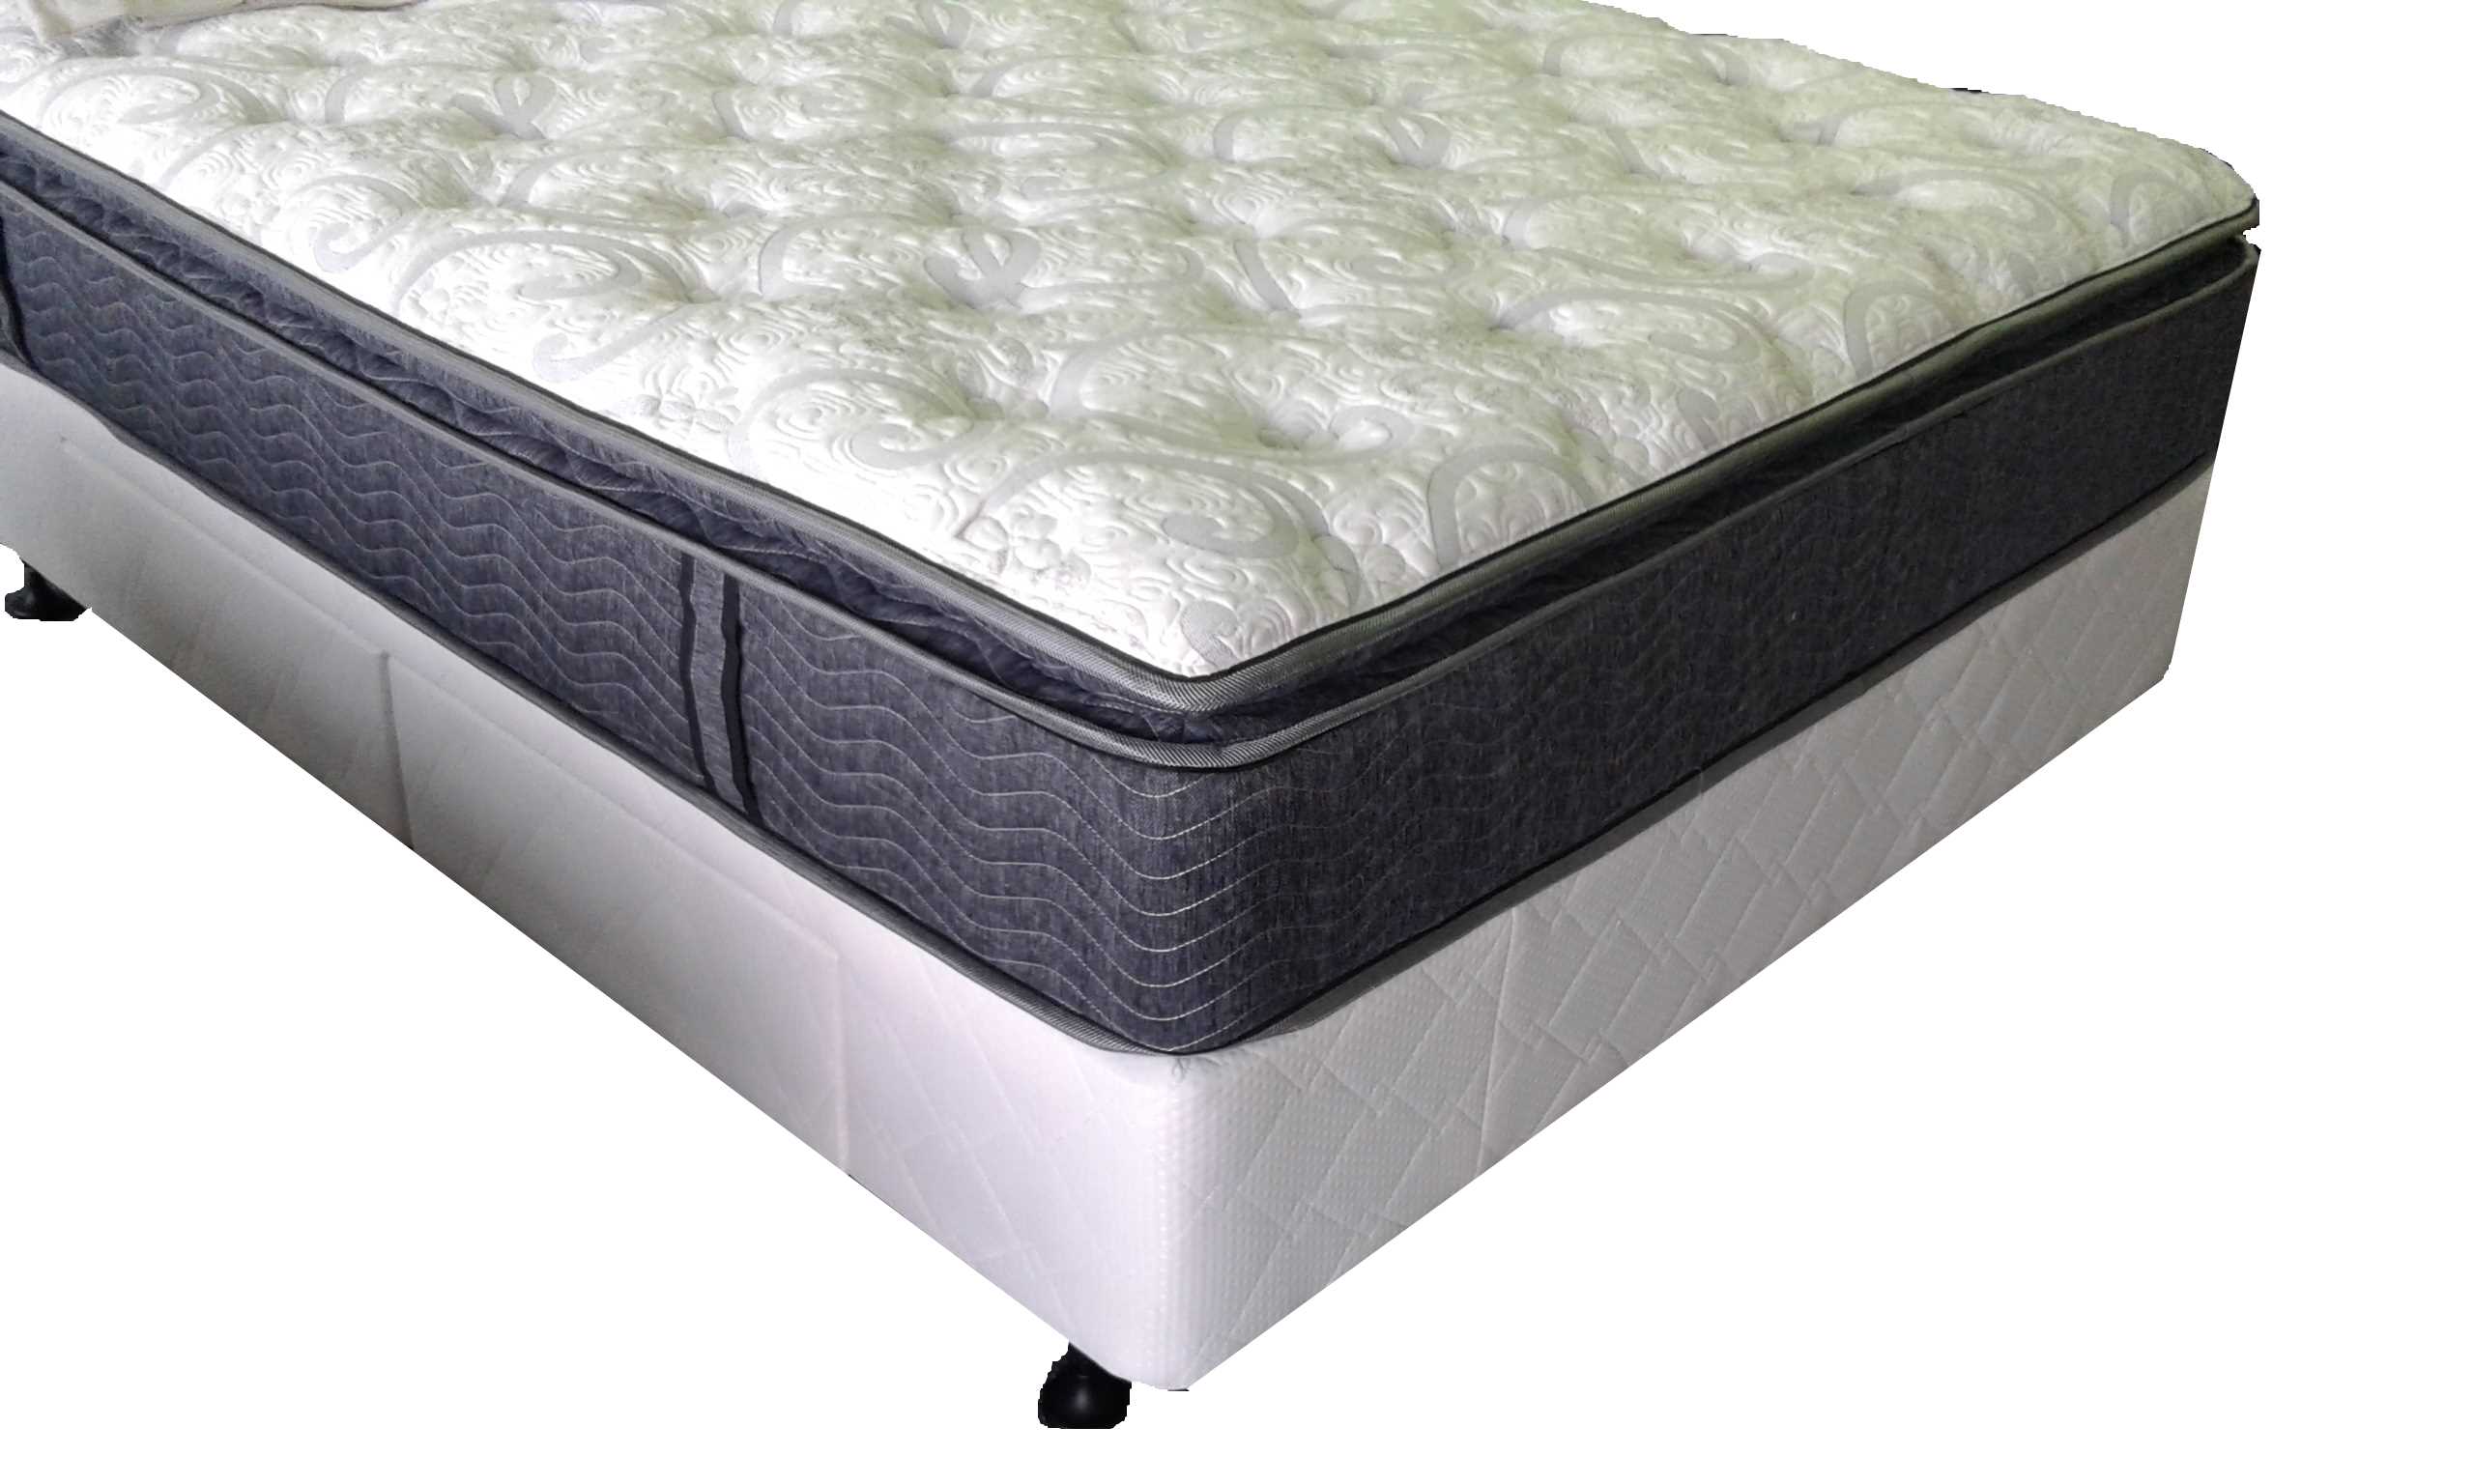 base for queen sise mattress